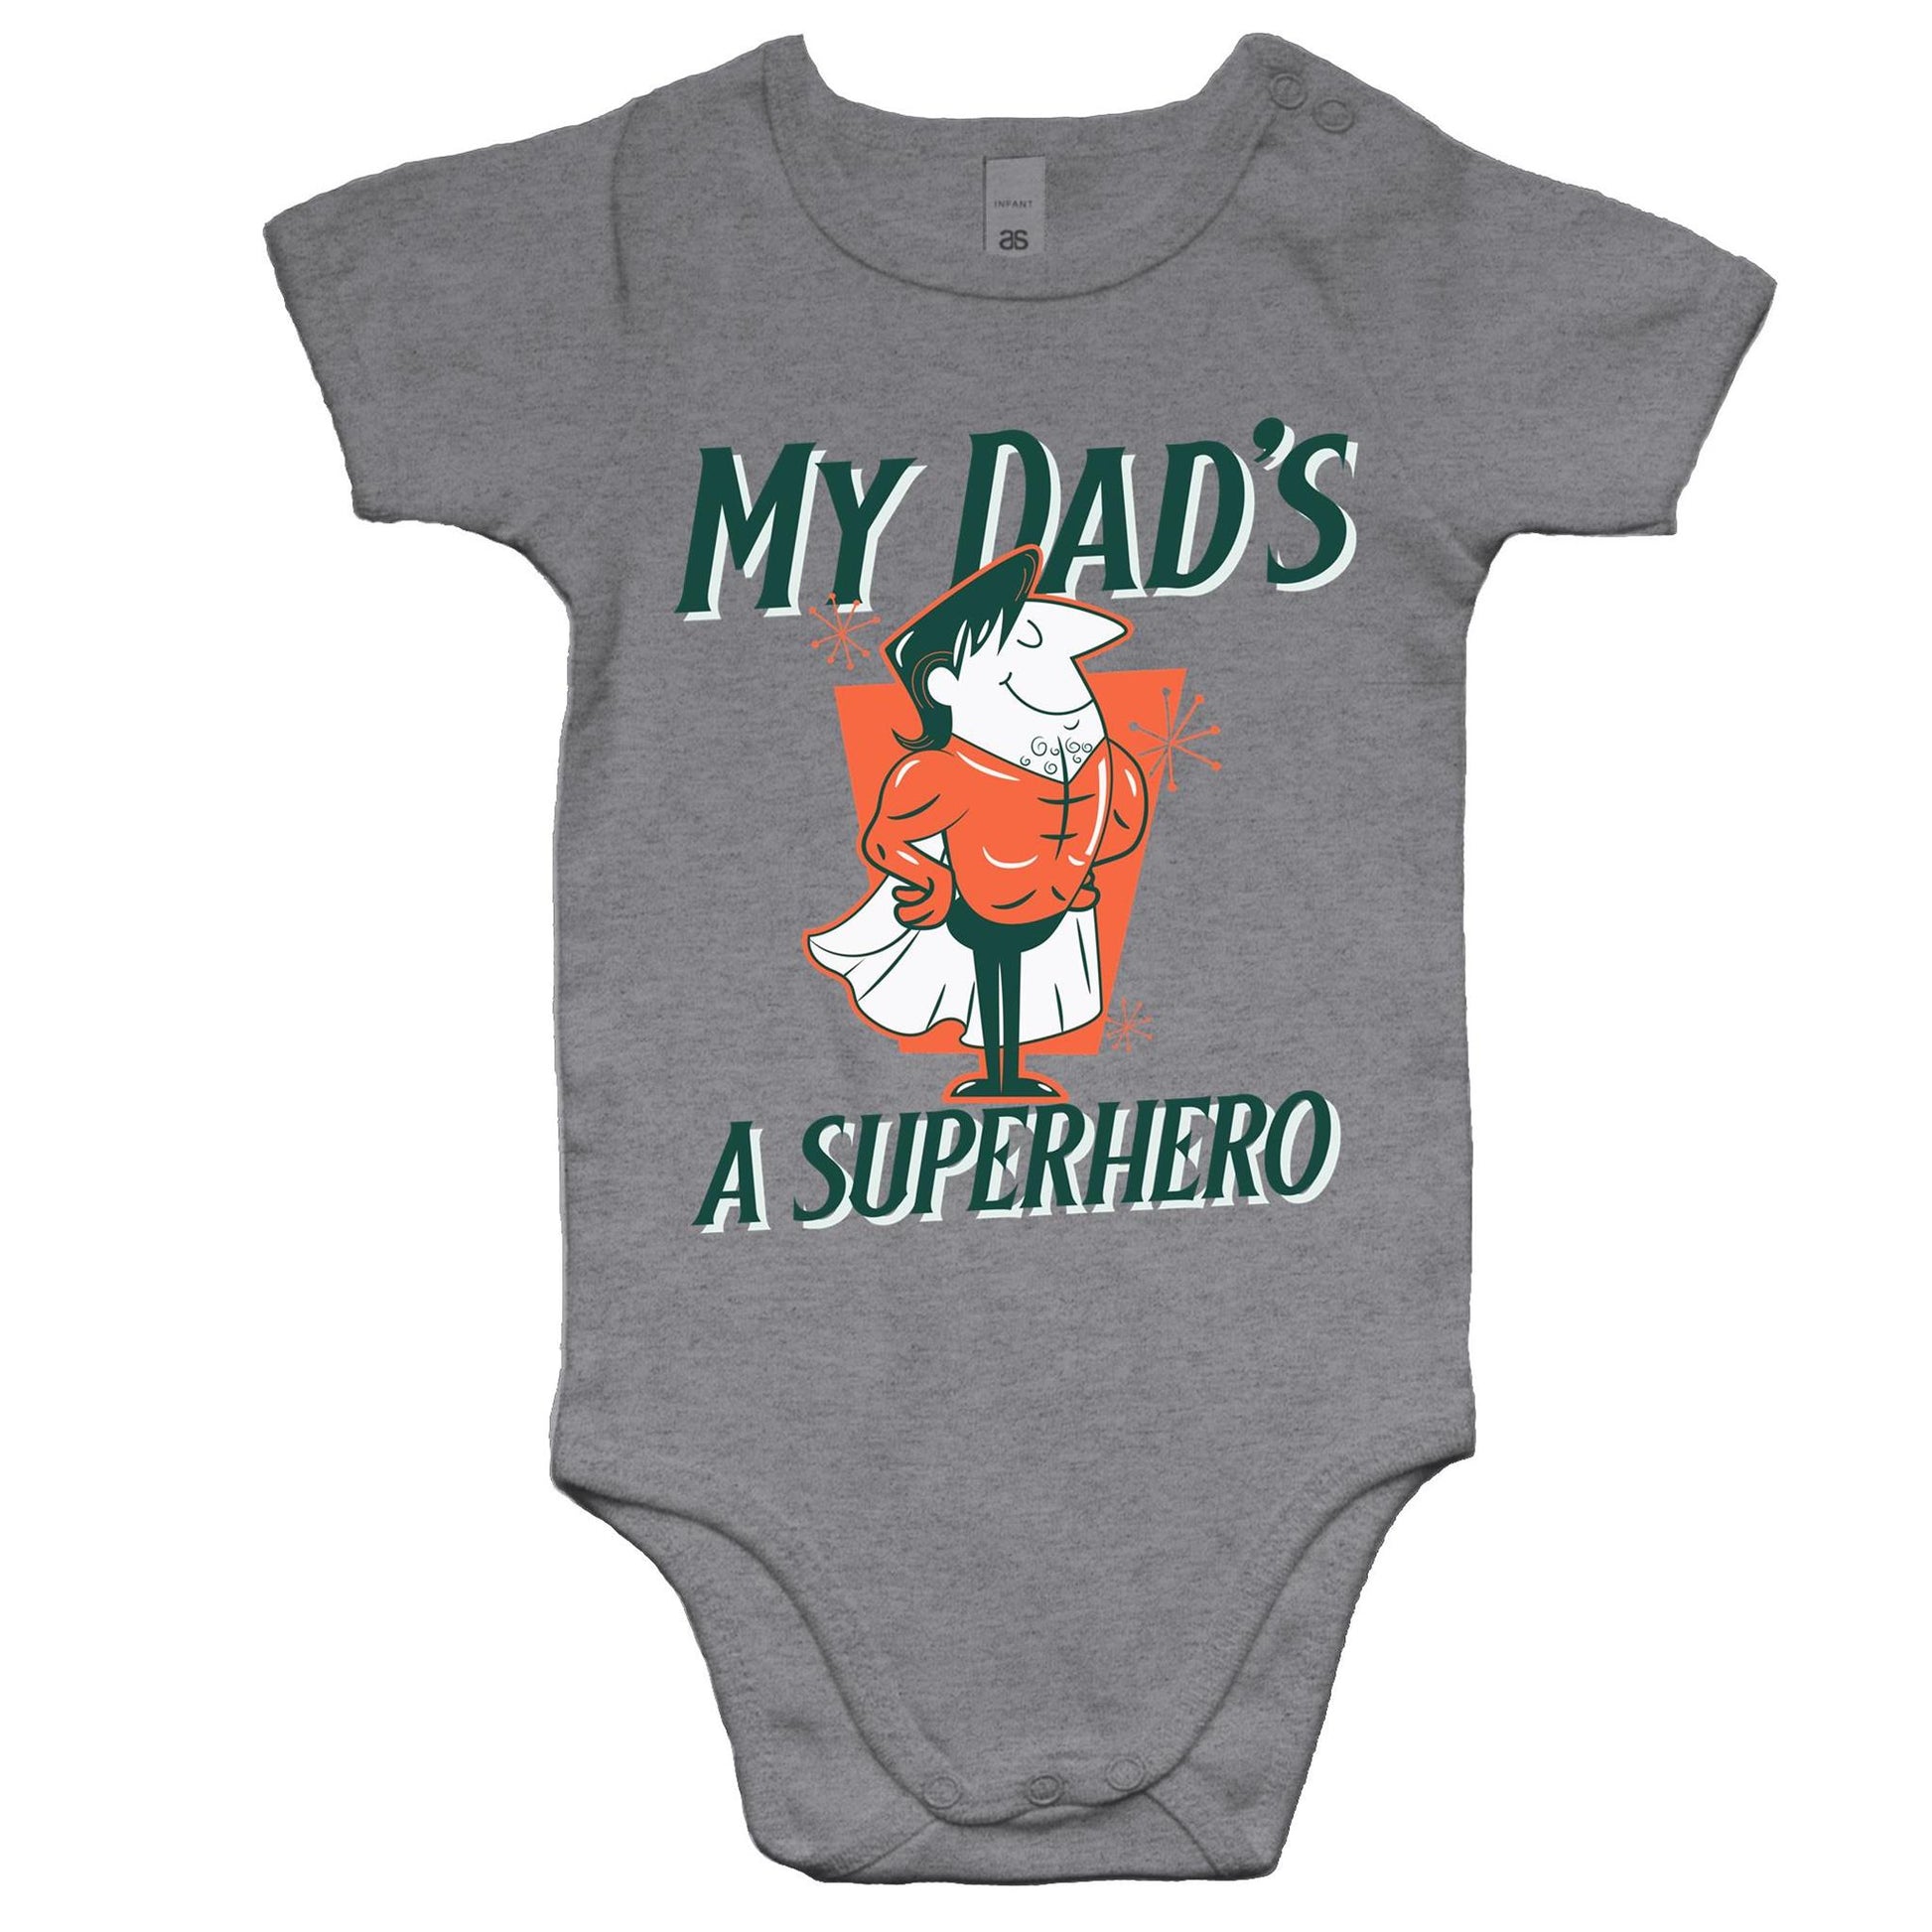 My Dad's A Superhero - Baby Bodysuit Grey Marle Baby Bodysuit Dad